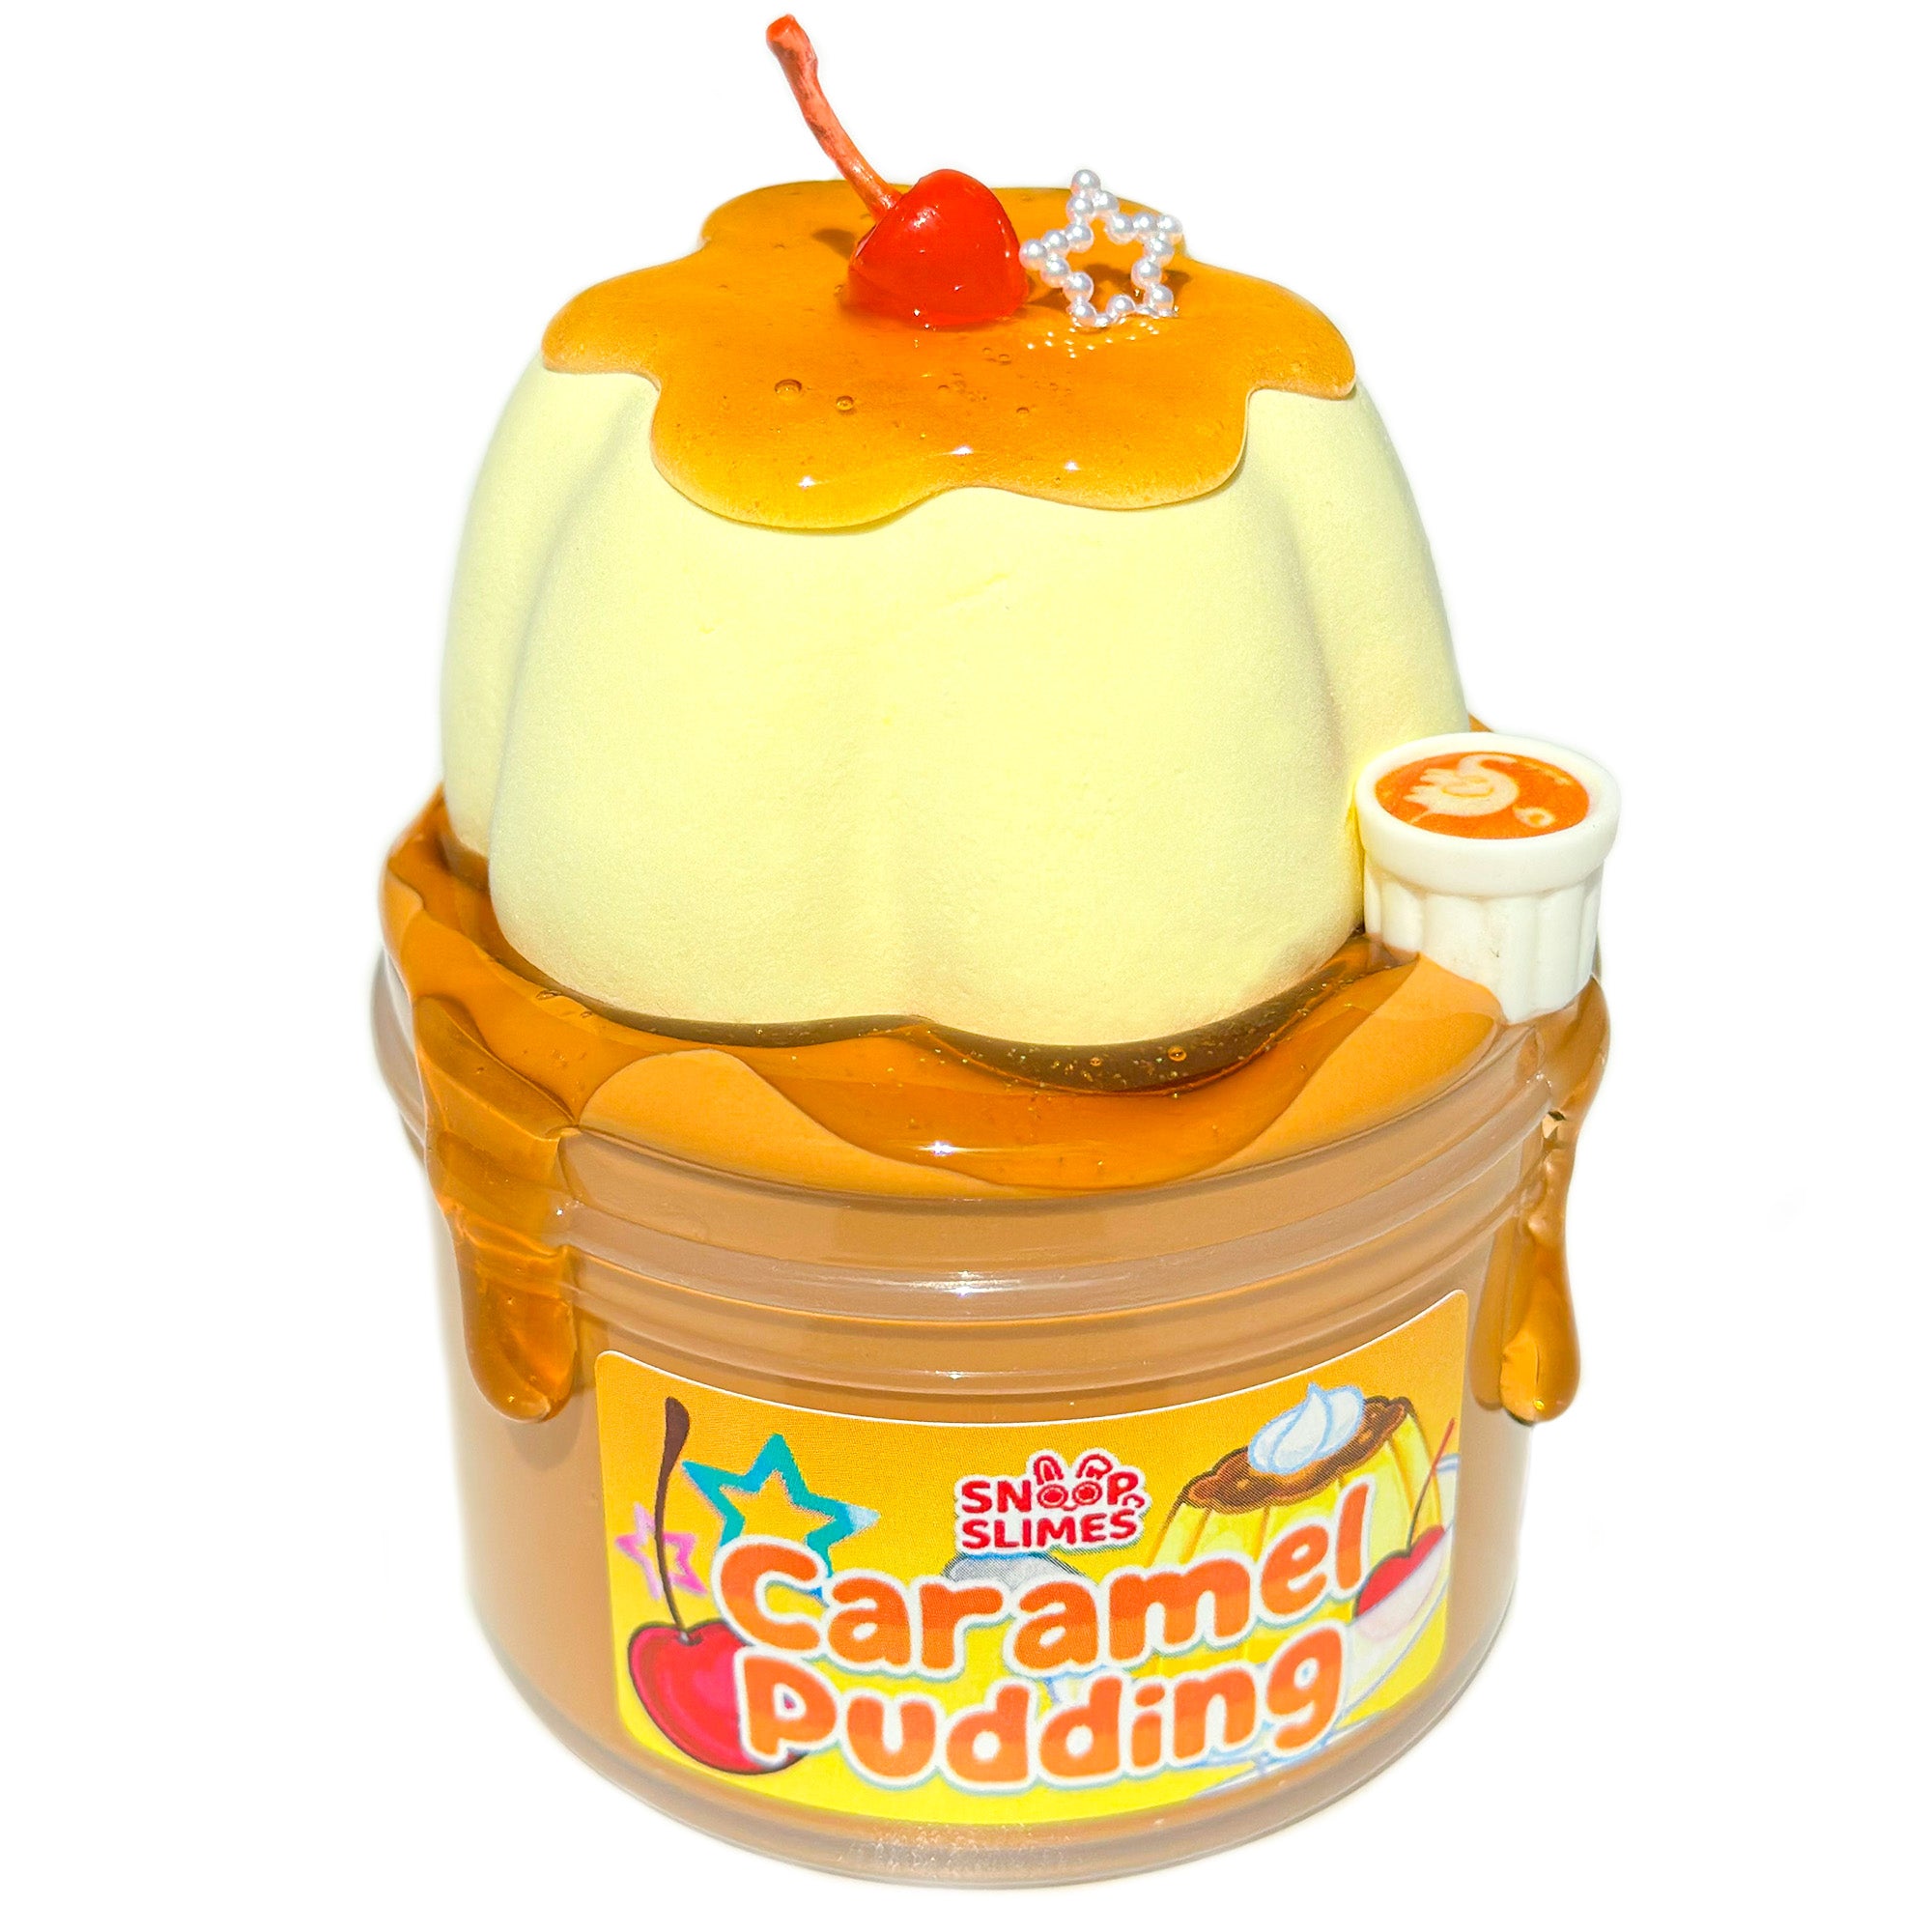 Caramel Pudding Slime